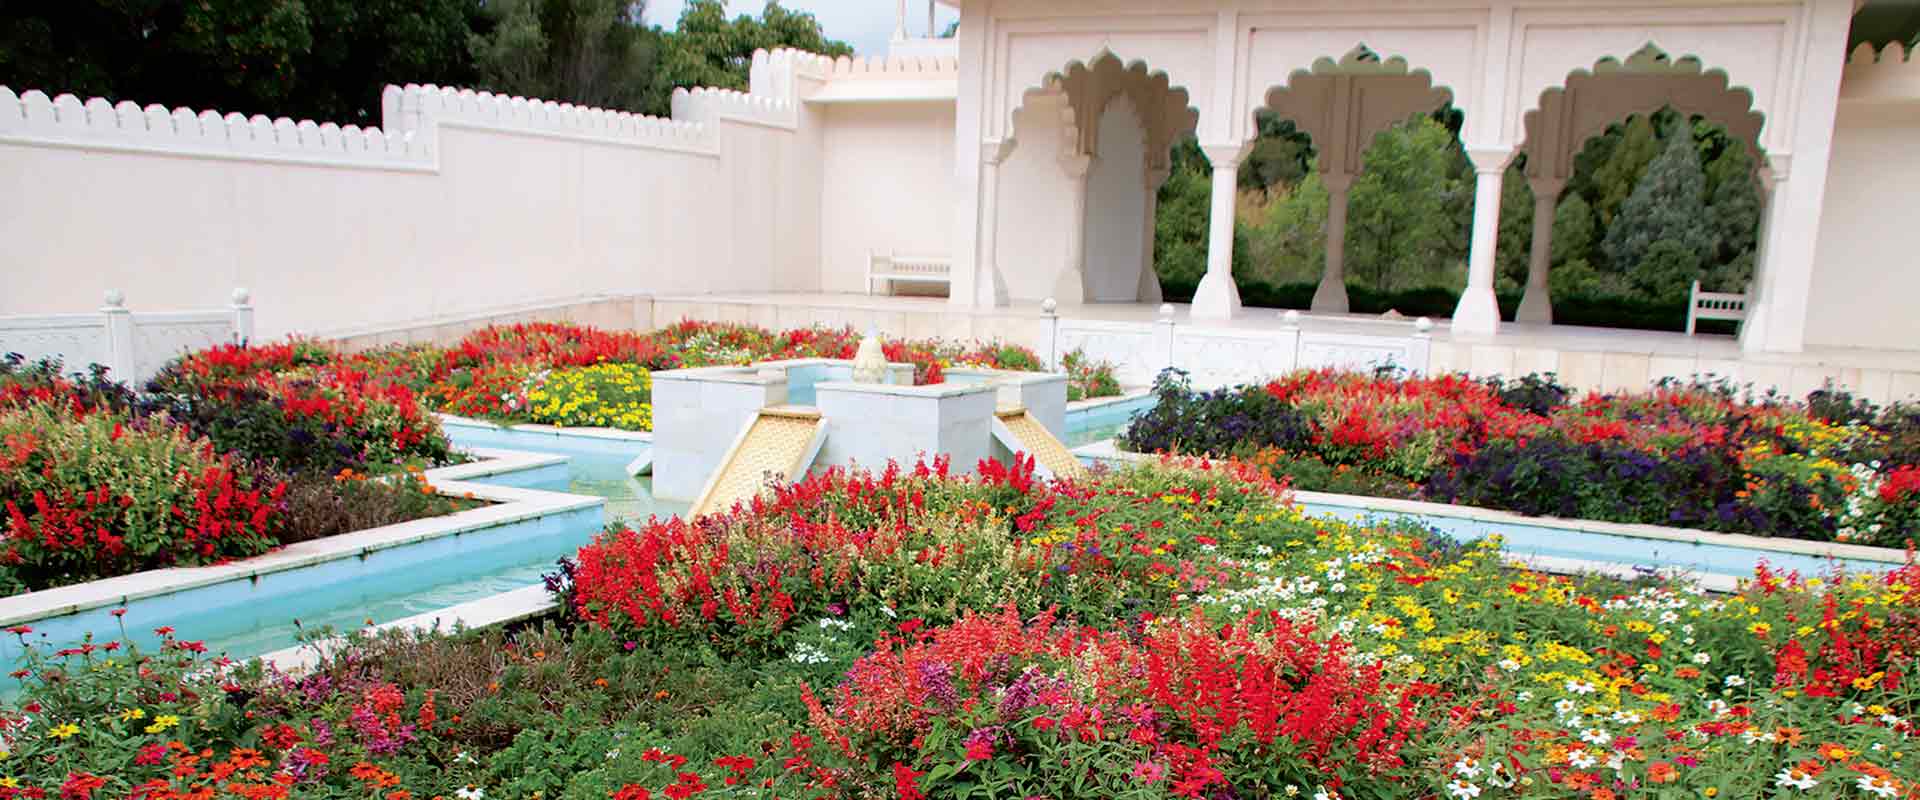 india themed garden flowers water feature hamilton, new zealand